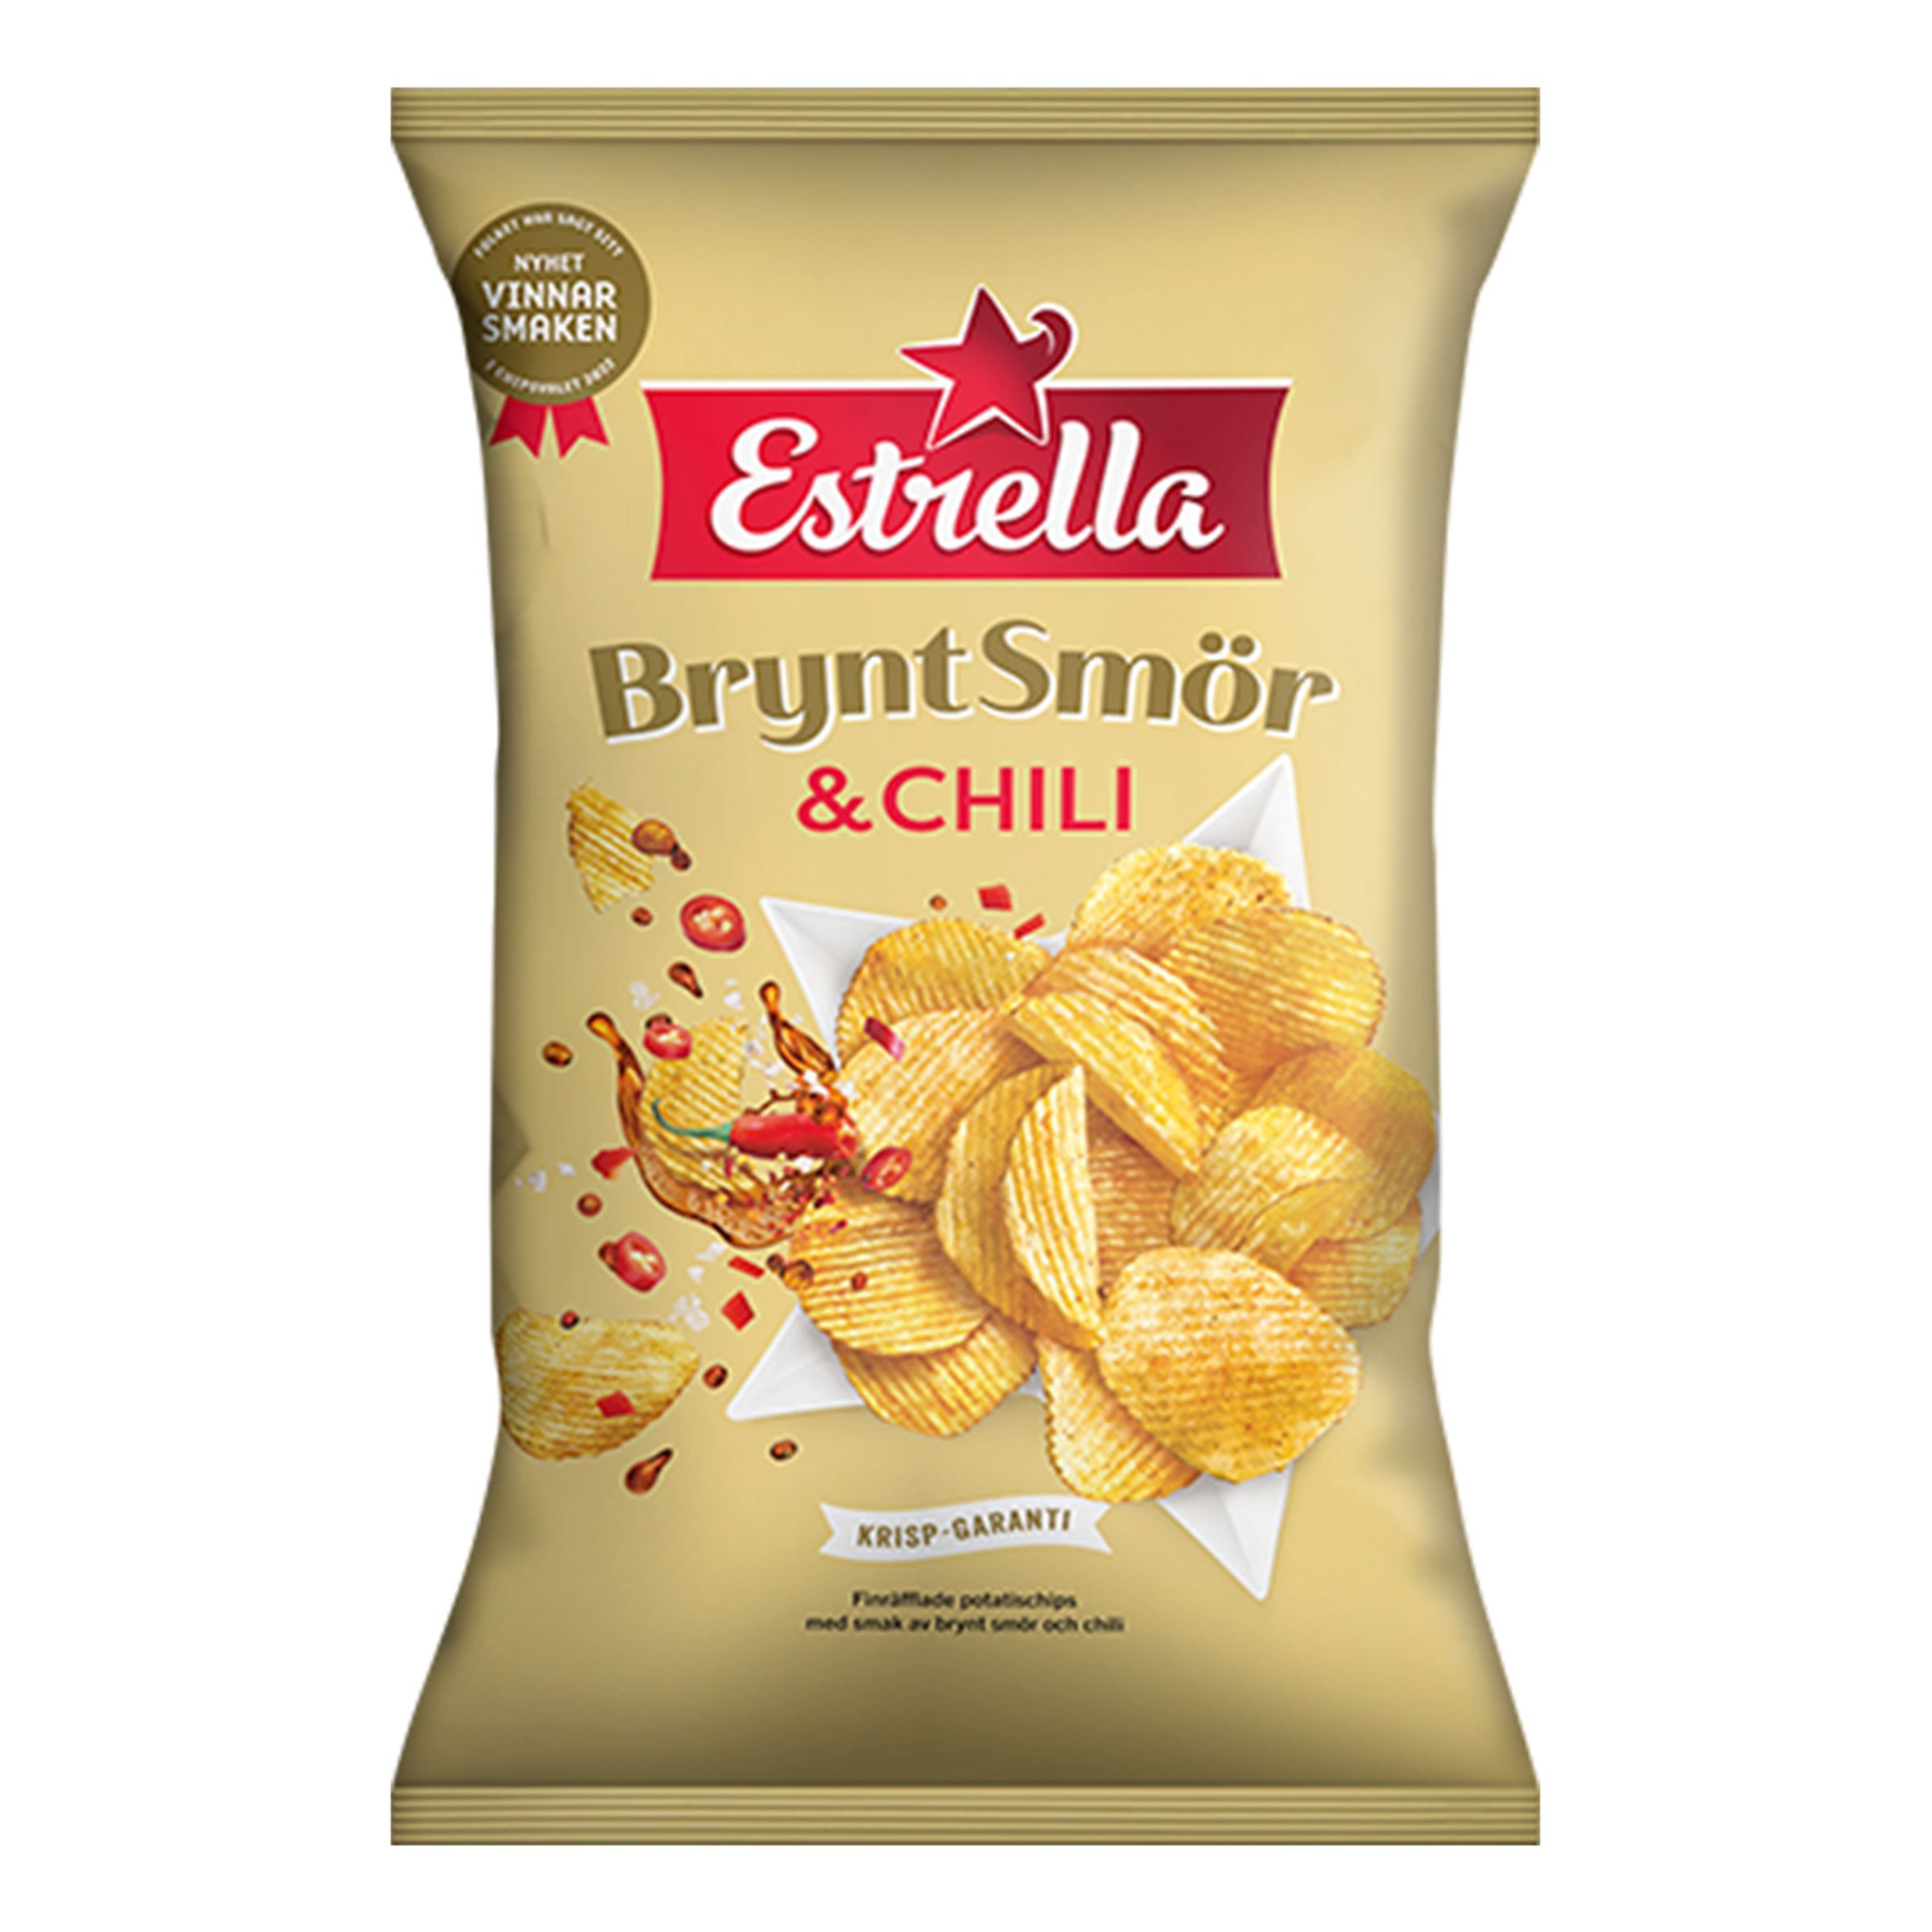 Estrella Brynt Smör & Chili - 175 gram